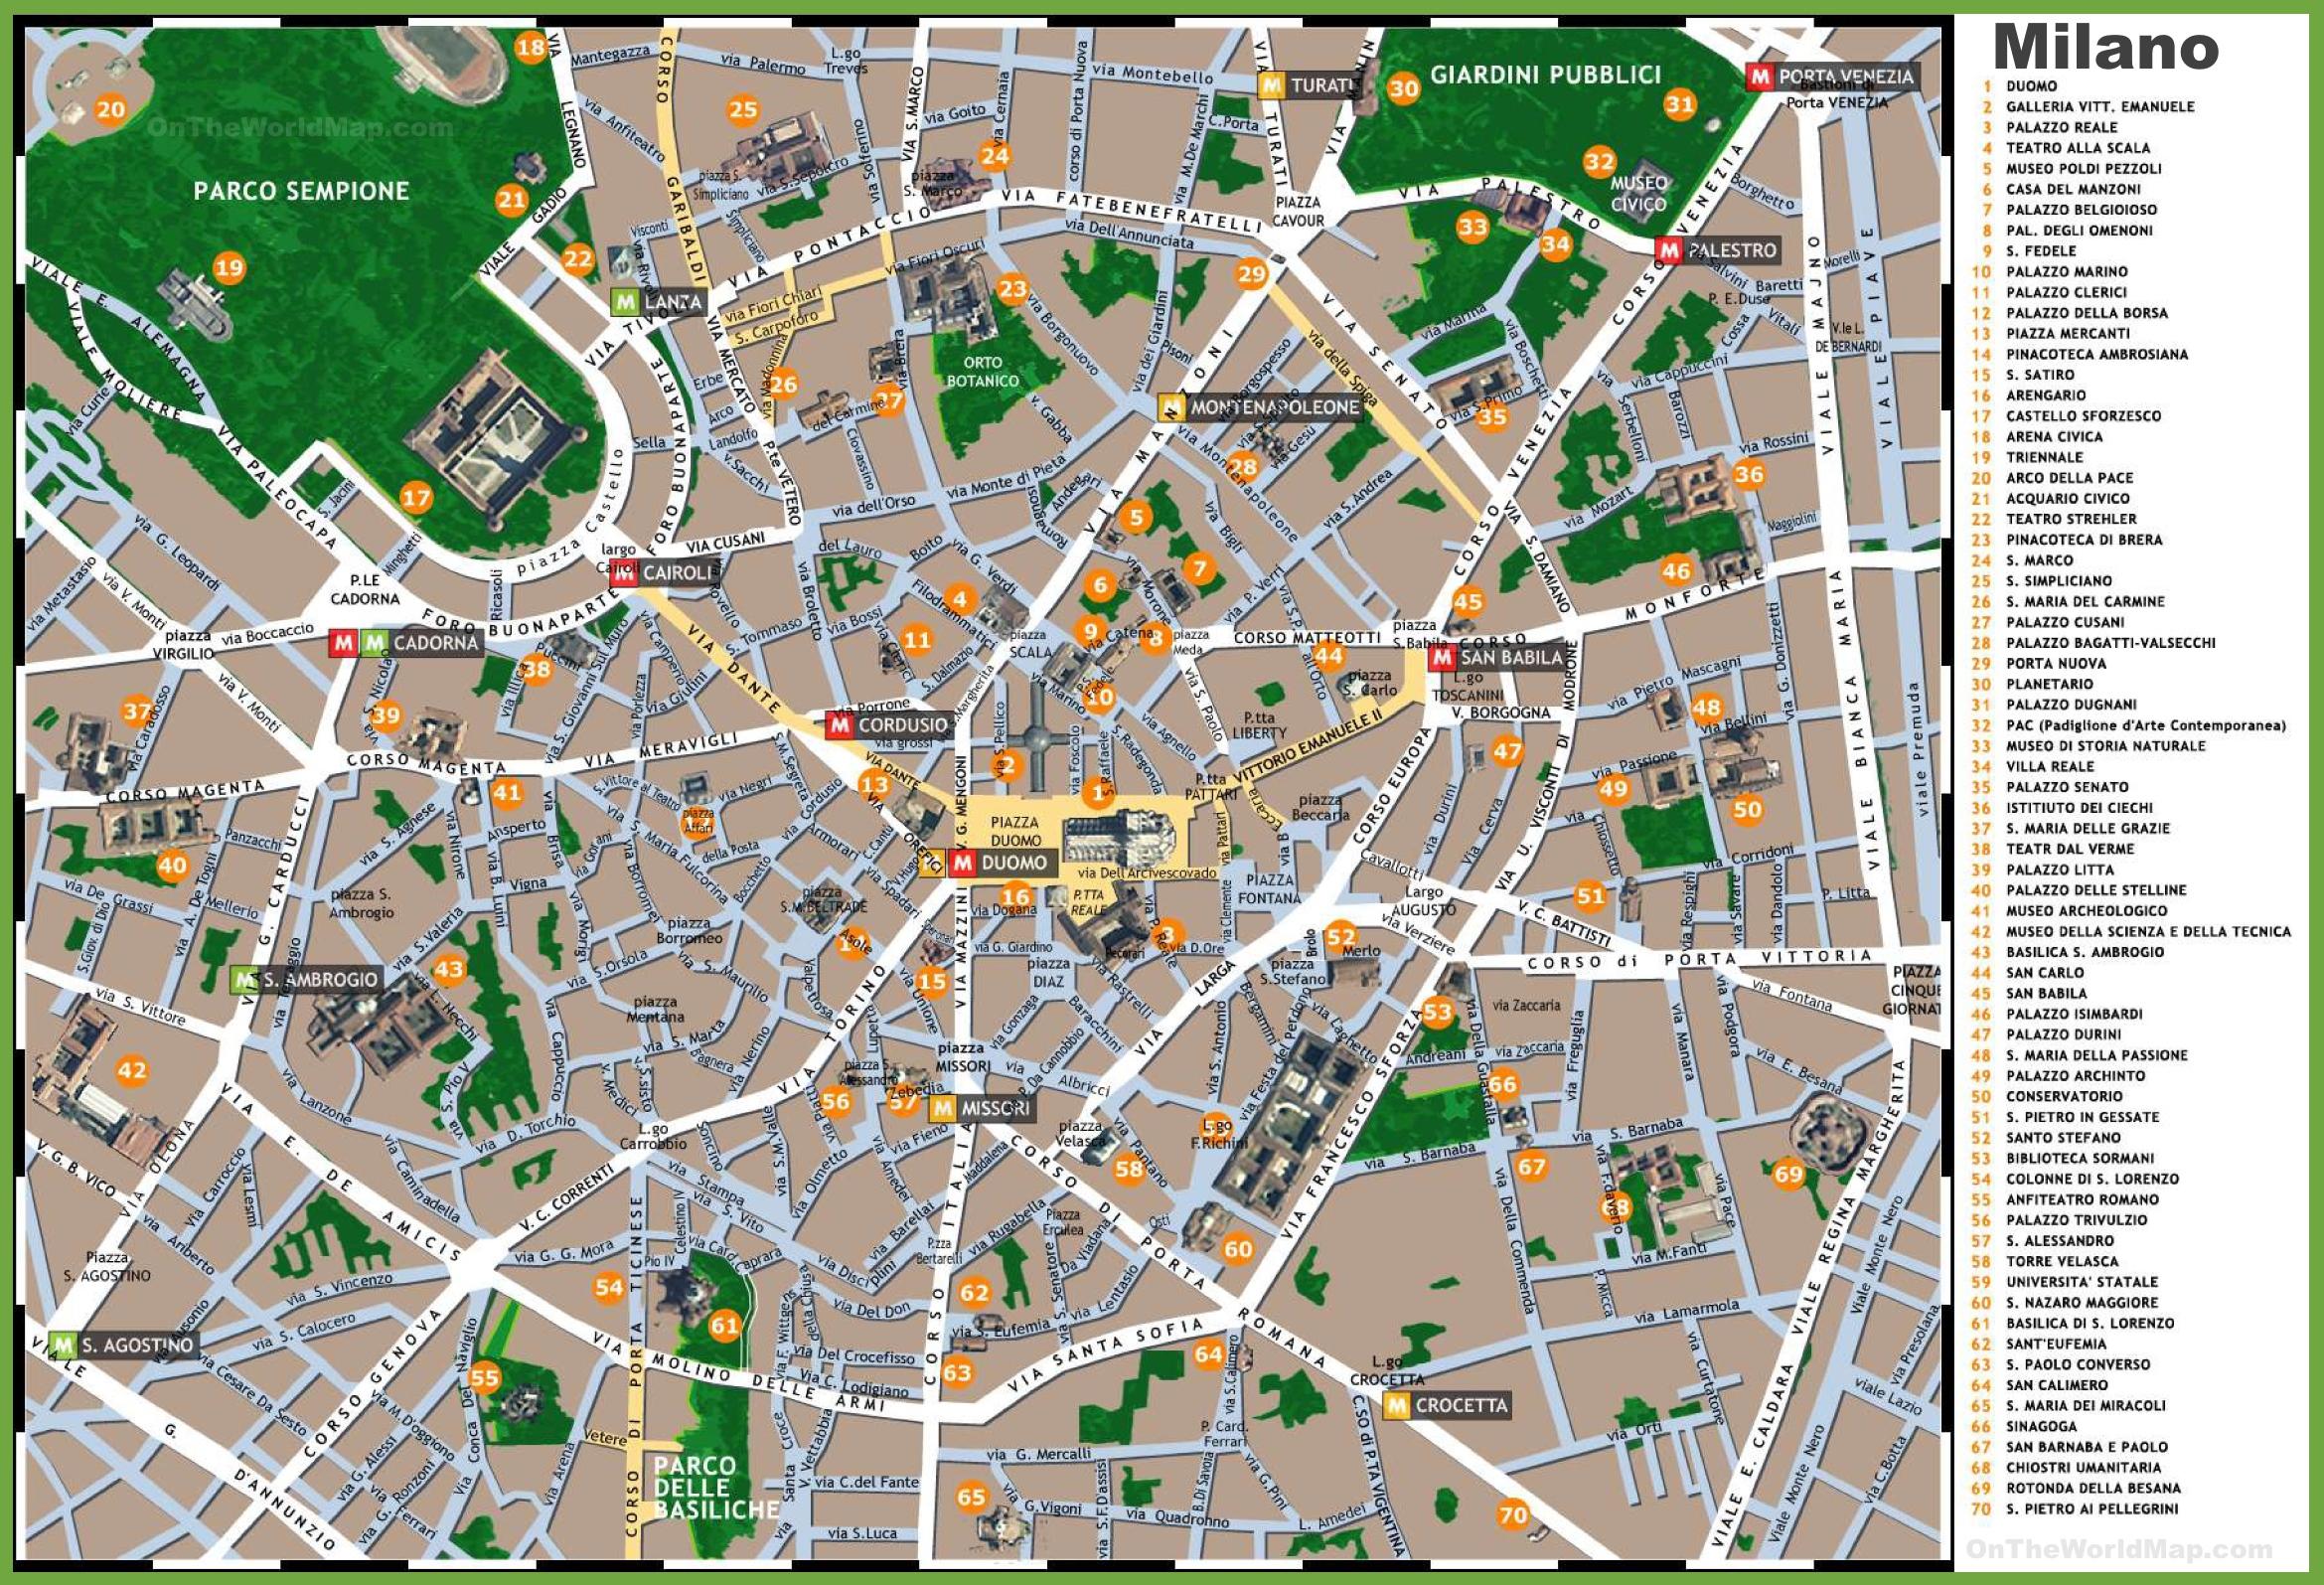 Milano tourist map - Mailand Sehenswürdigkeiten Karte (Lombardei - Italien)